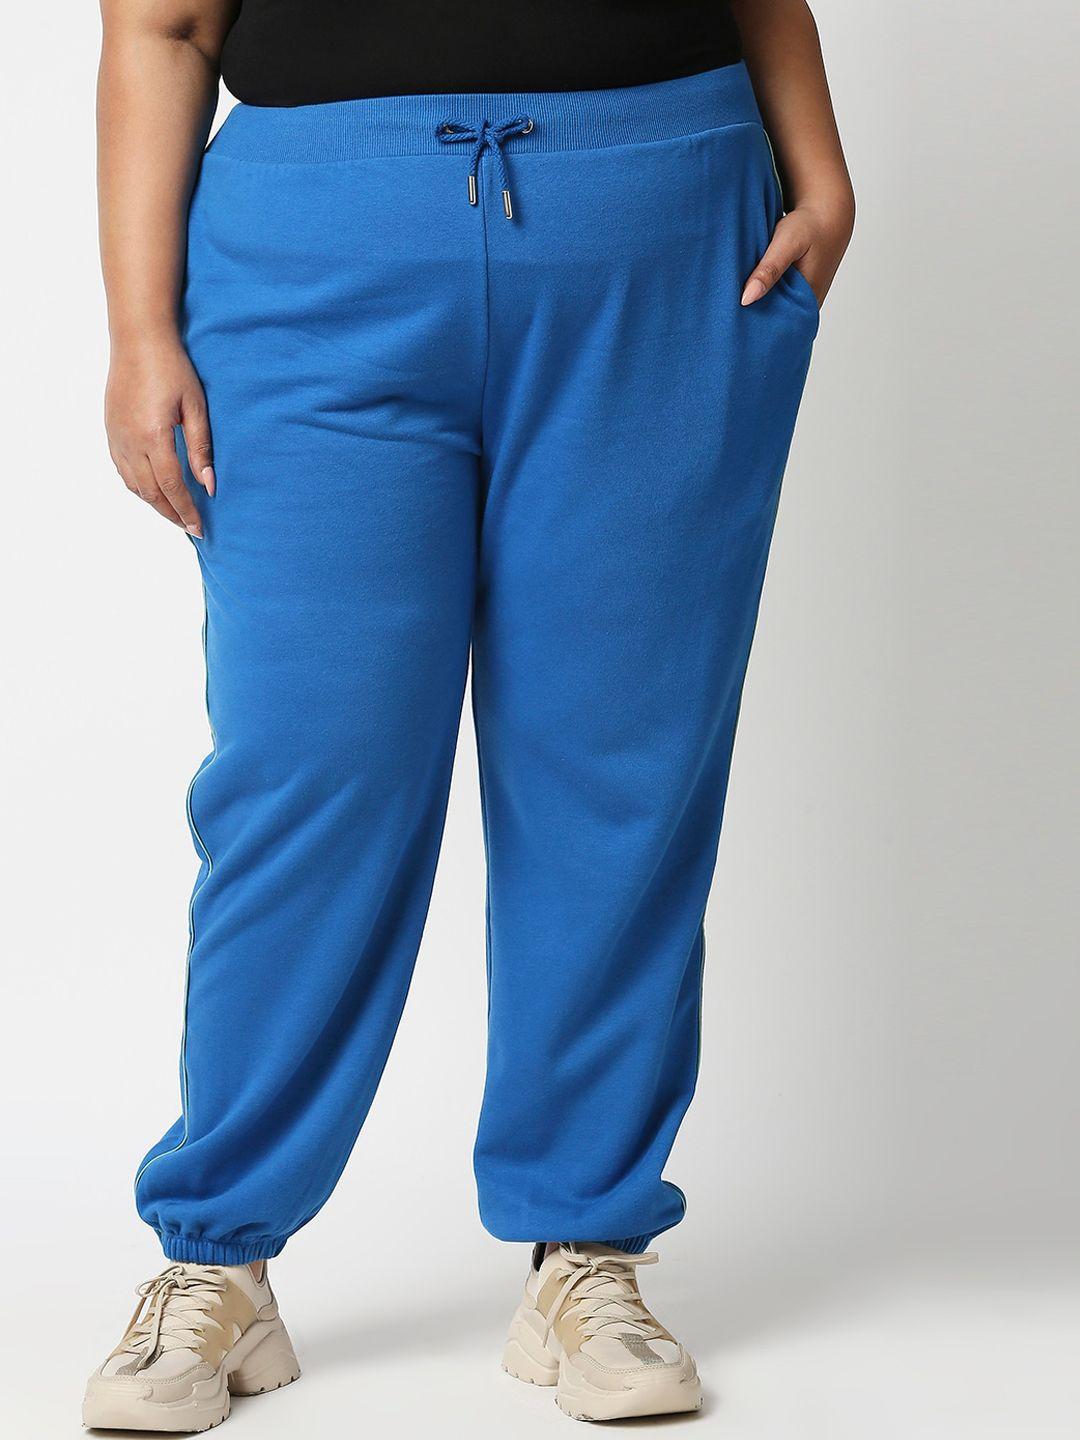 20dresses women blue trousers